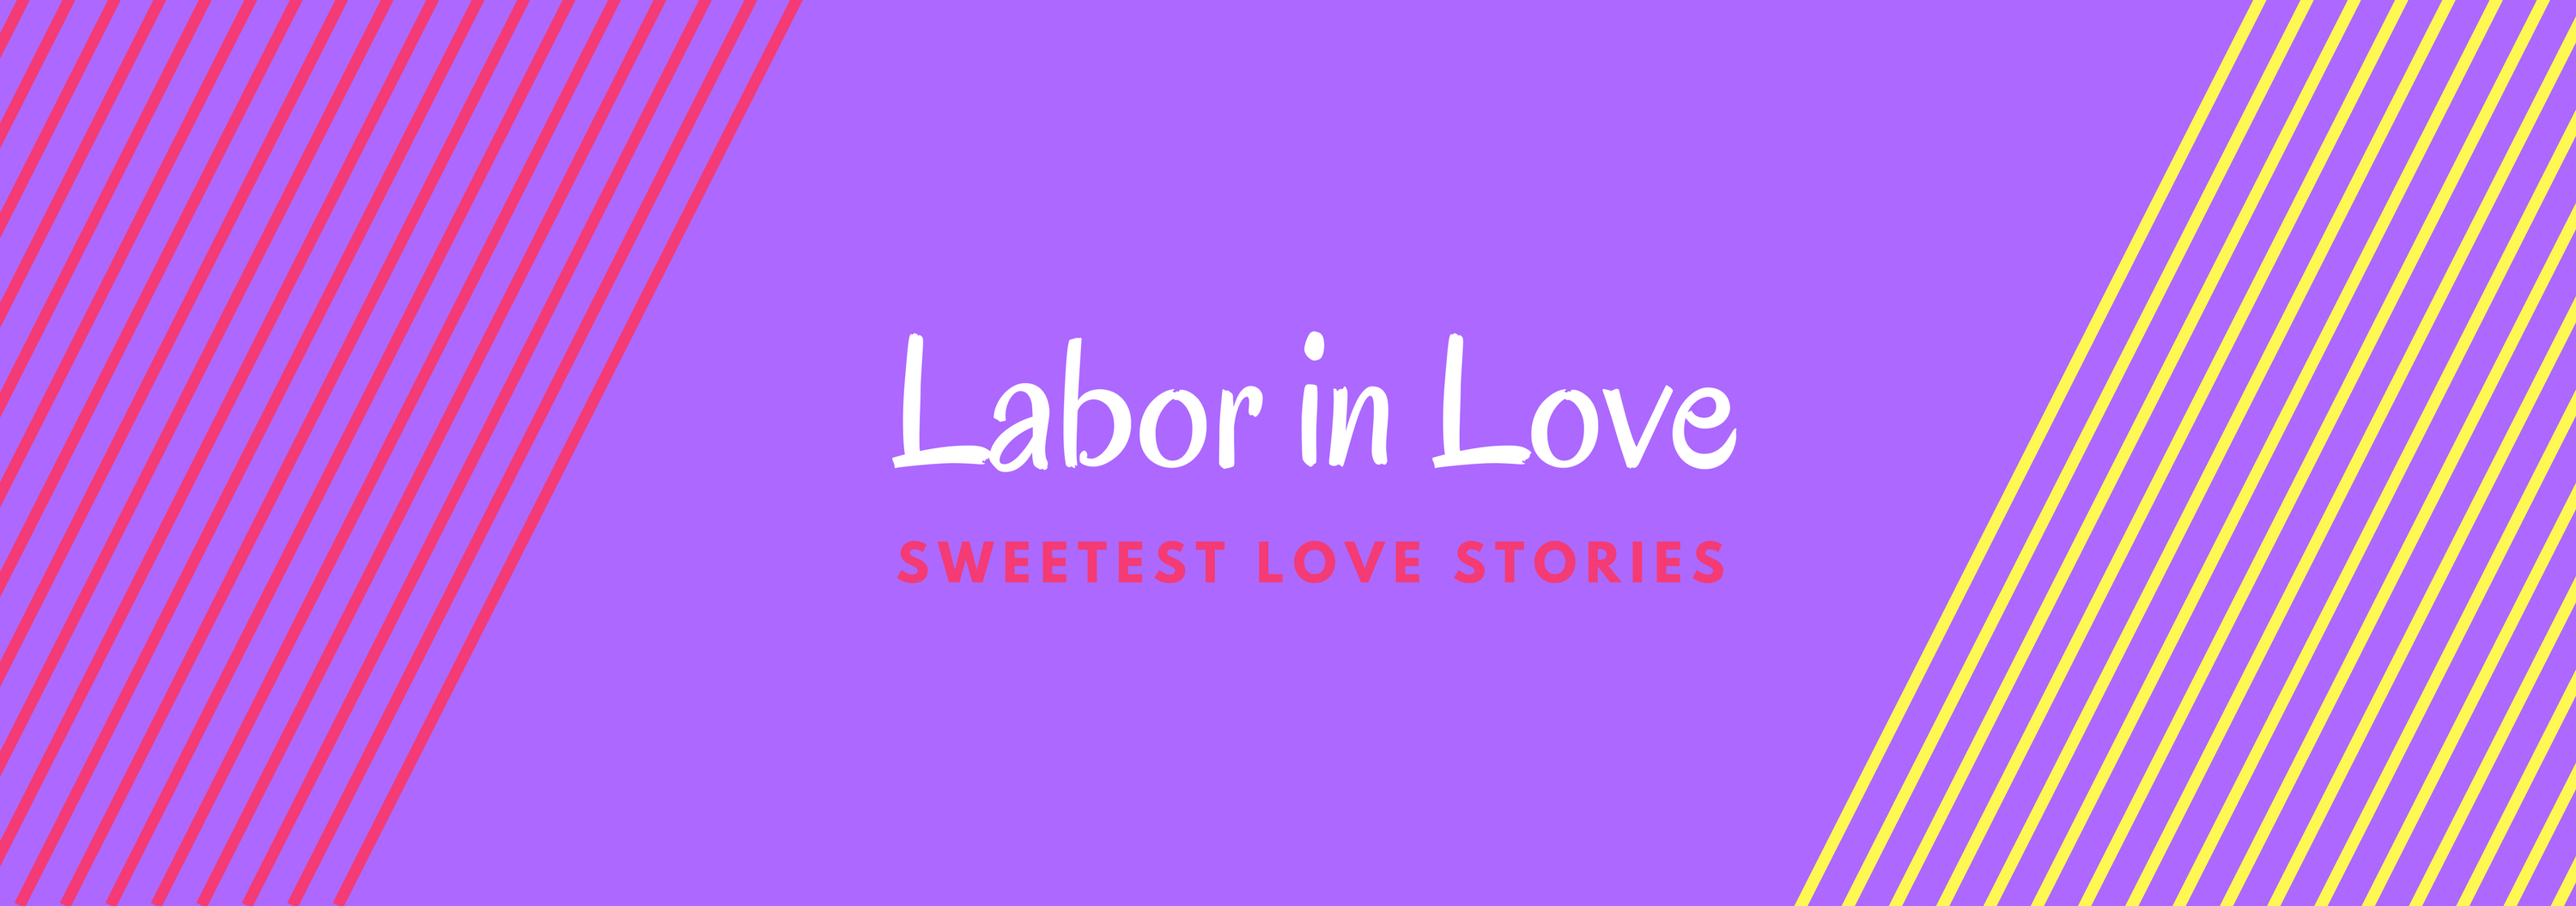 Labor in Love Headline 